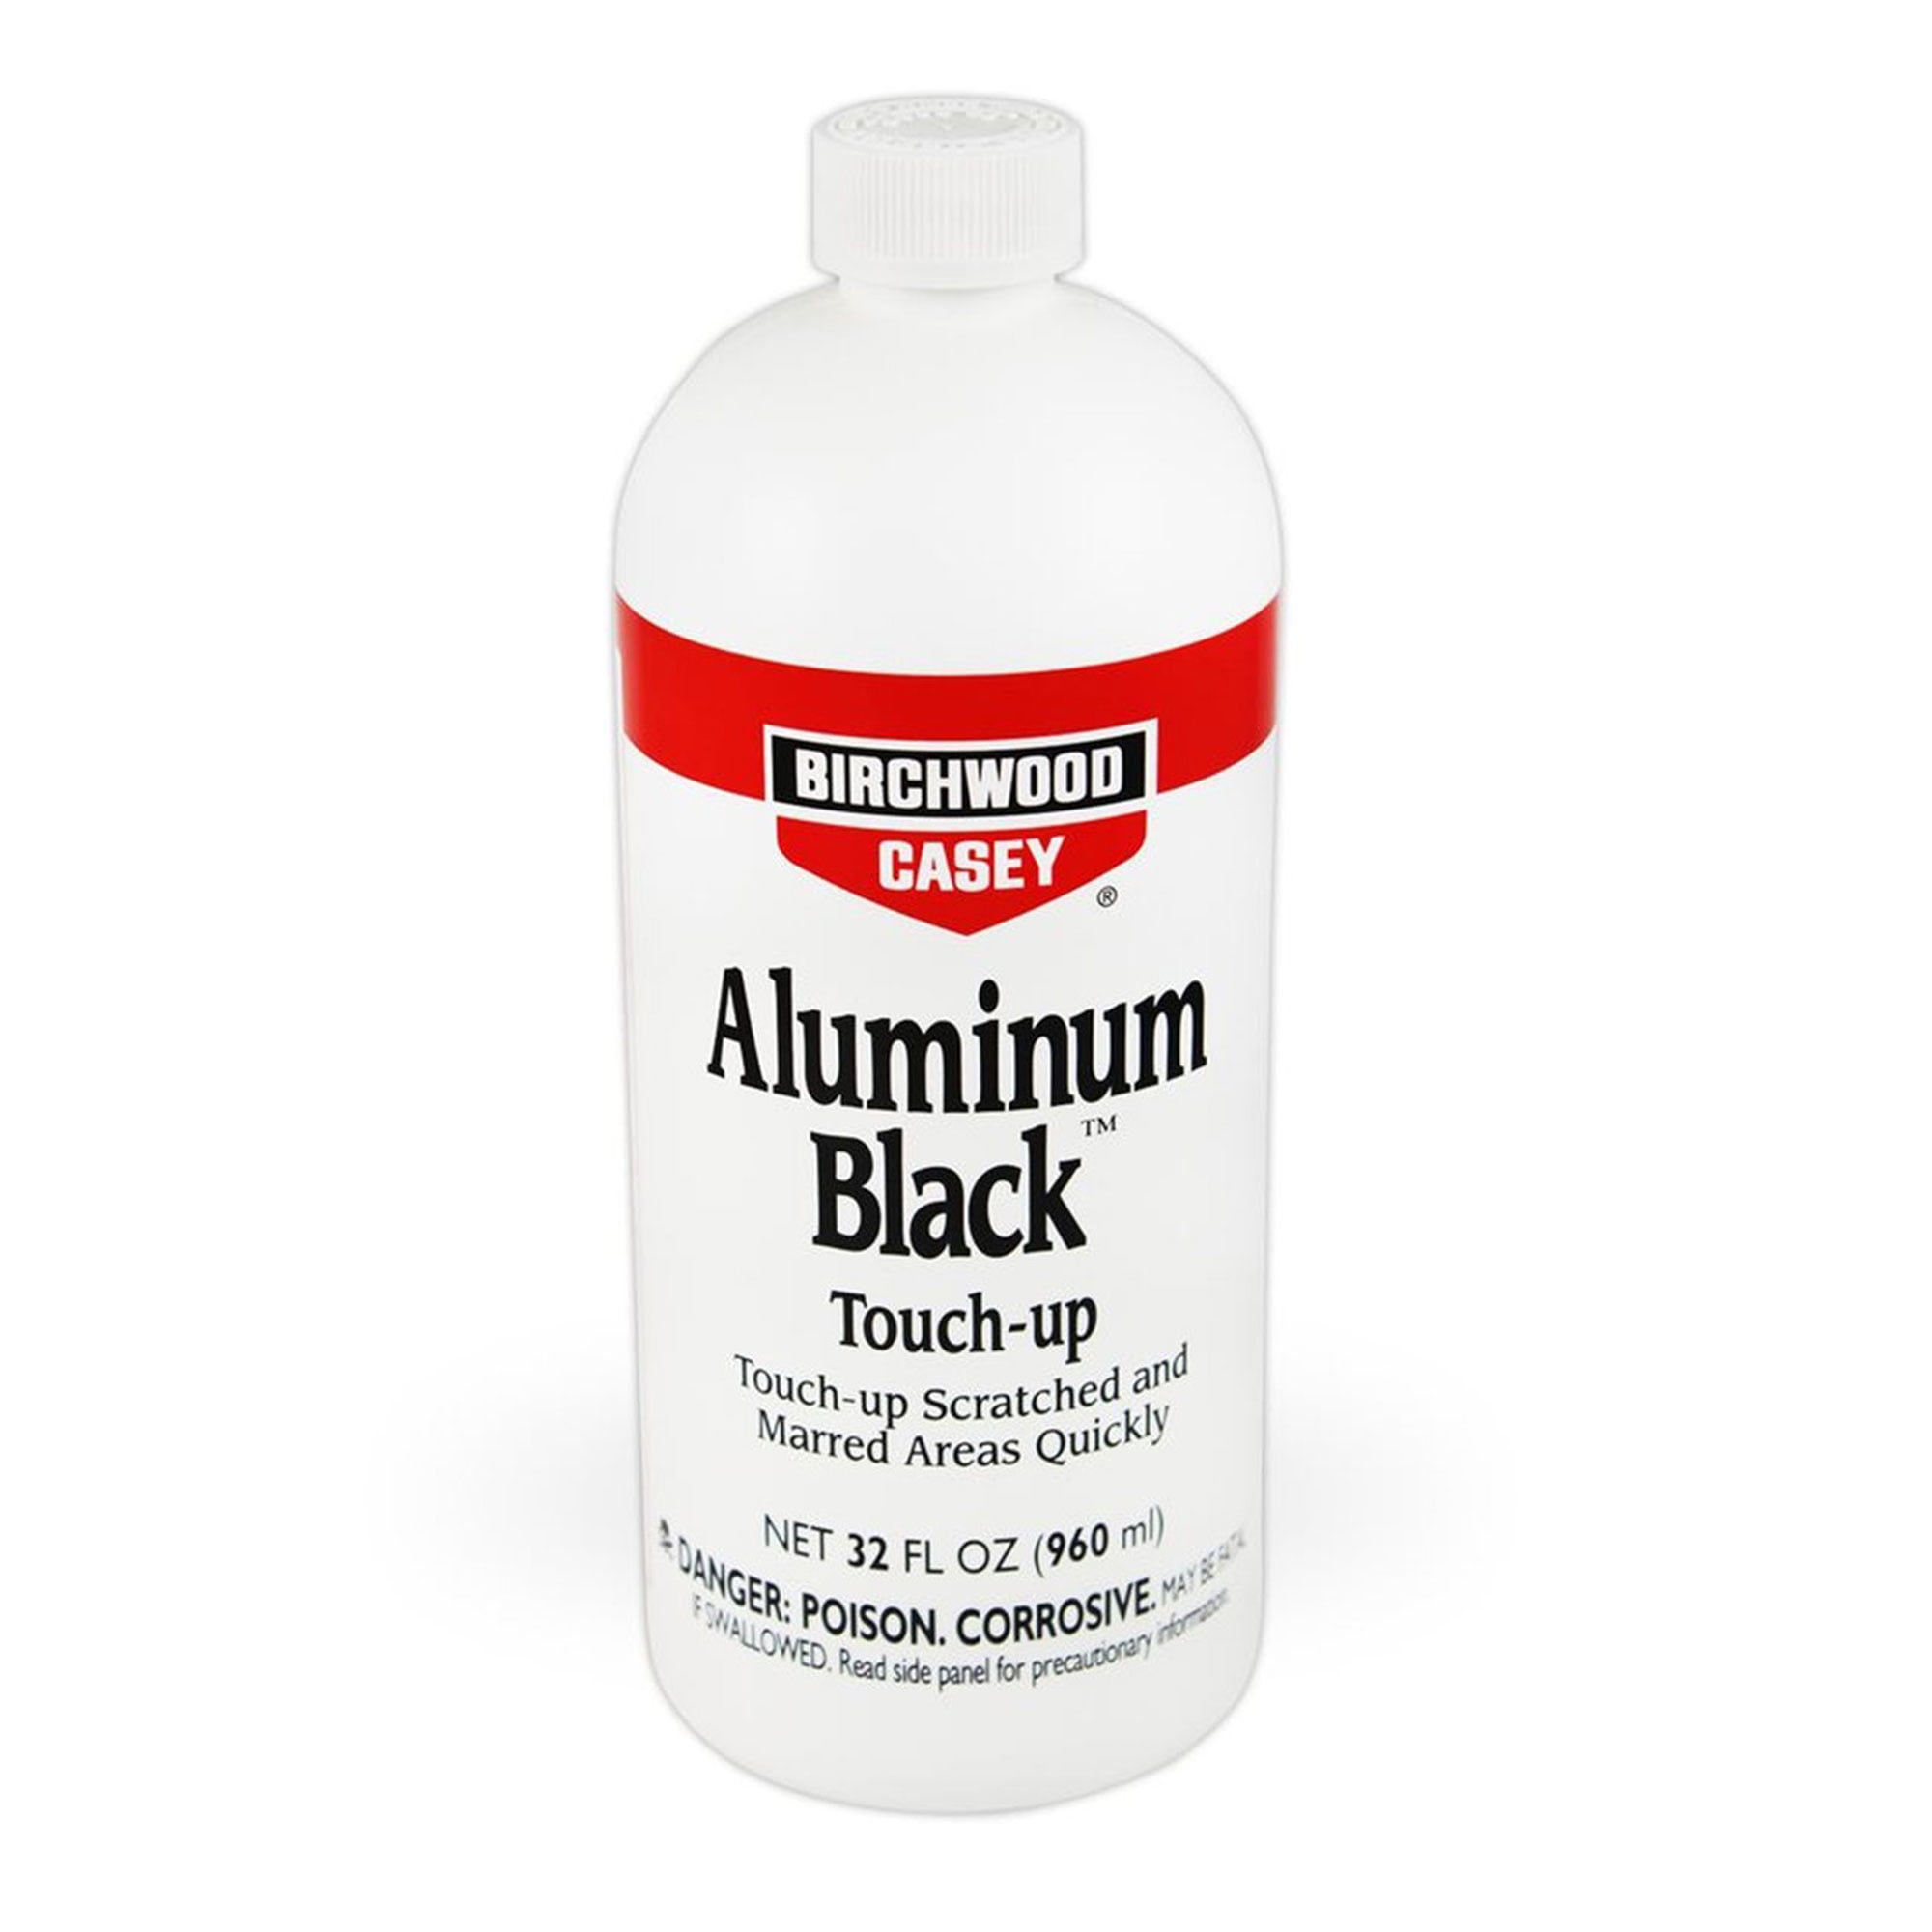 Birchwood Casey 15132 Aluminum Black Metal Finish Touch Up, 32 Fluid Ounces  